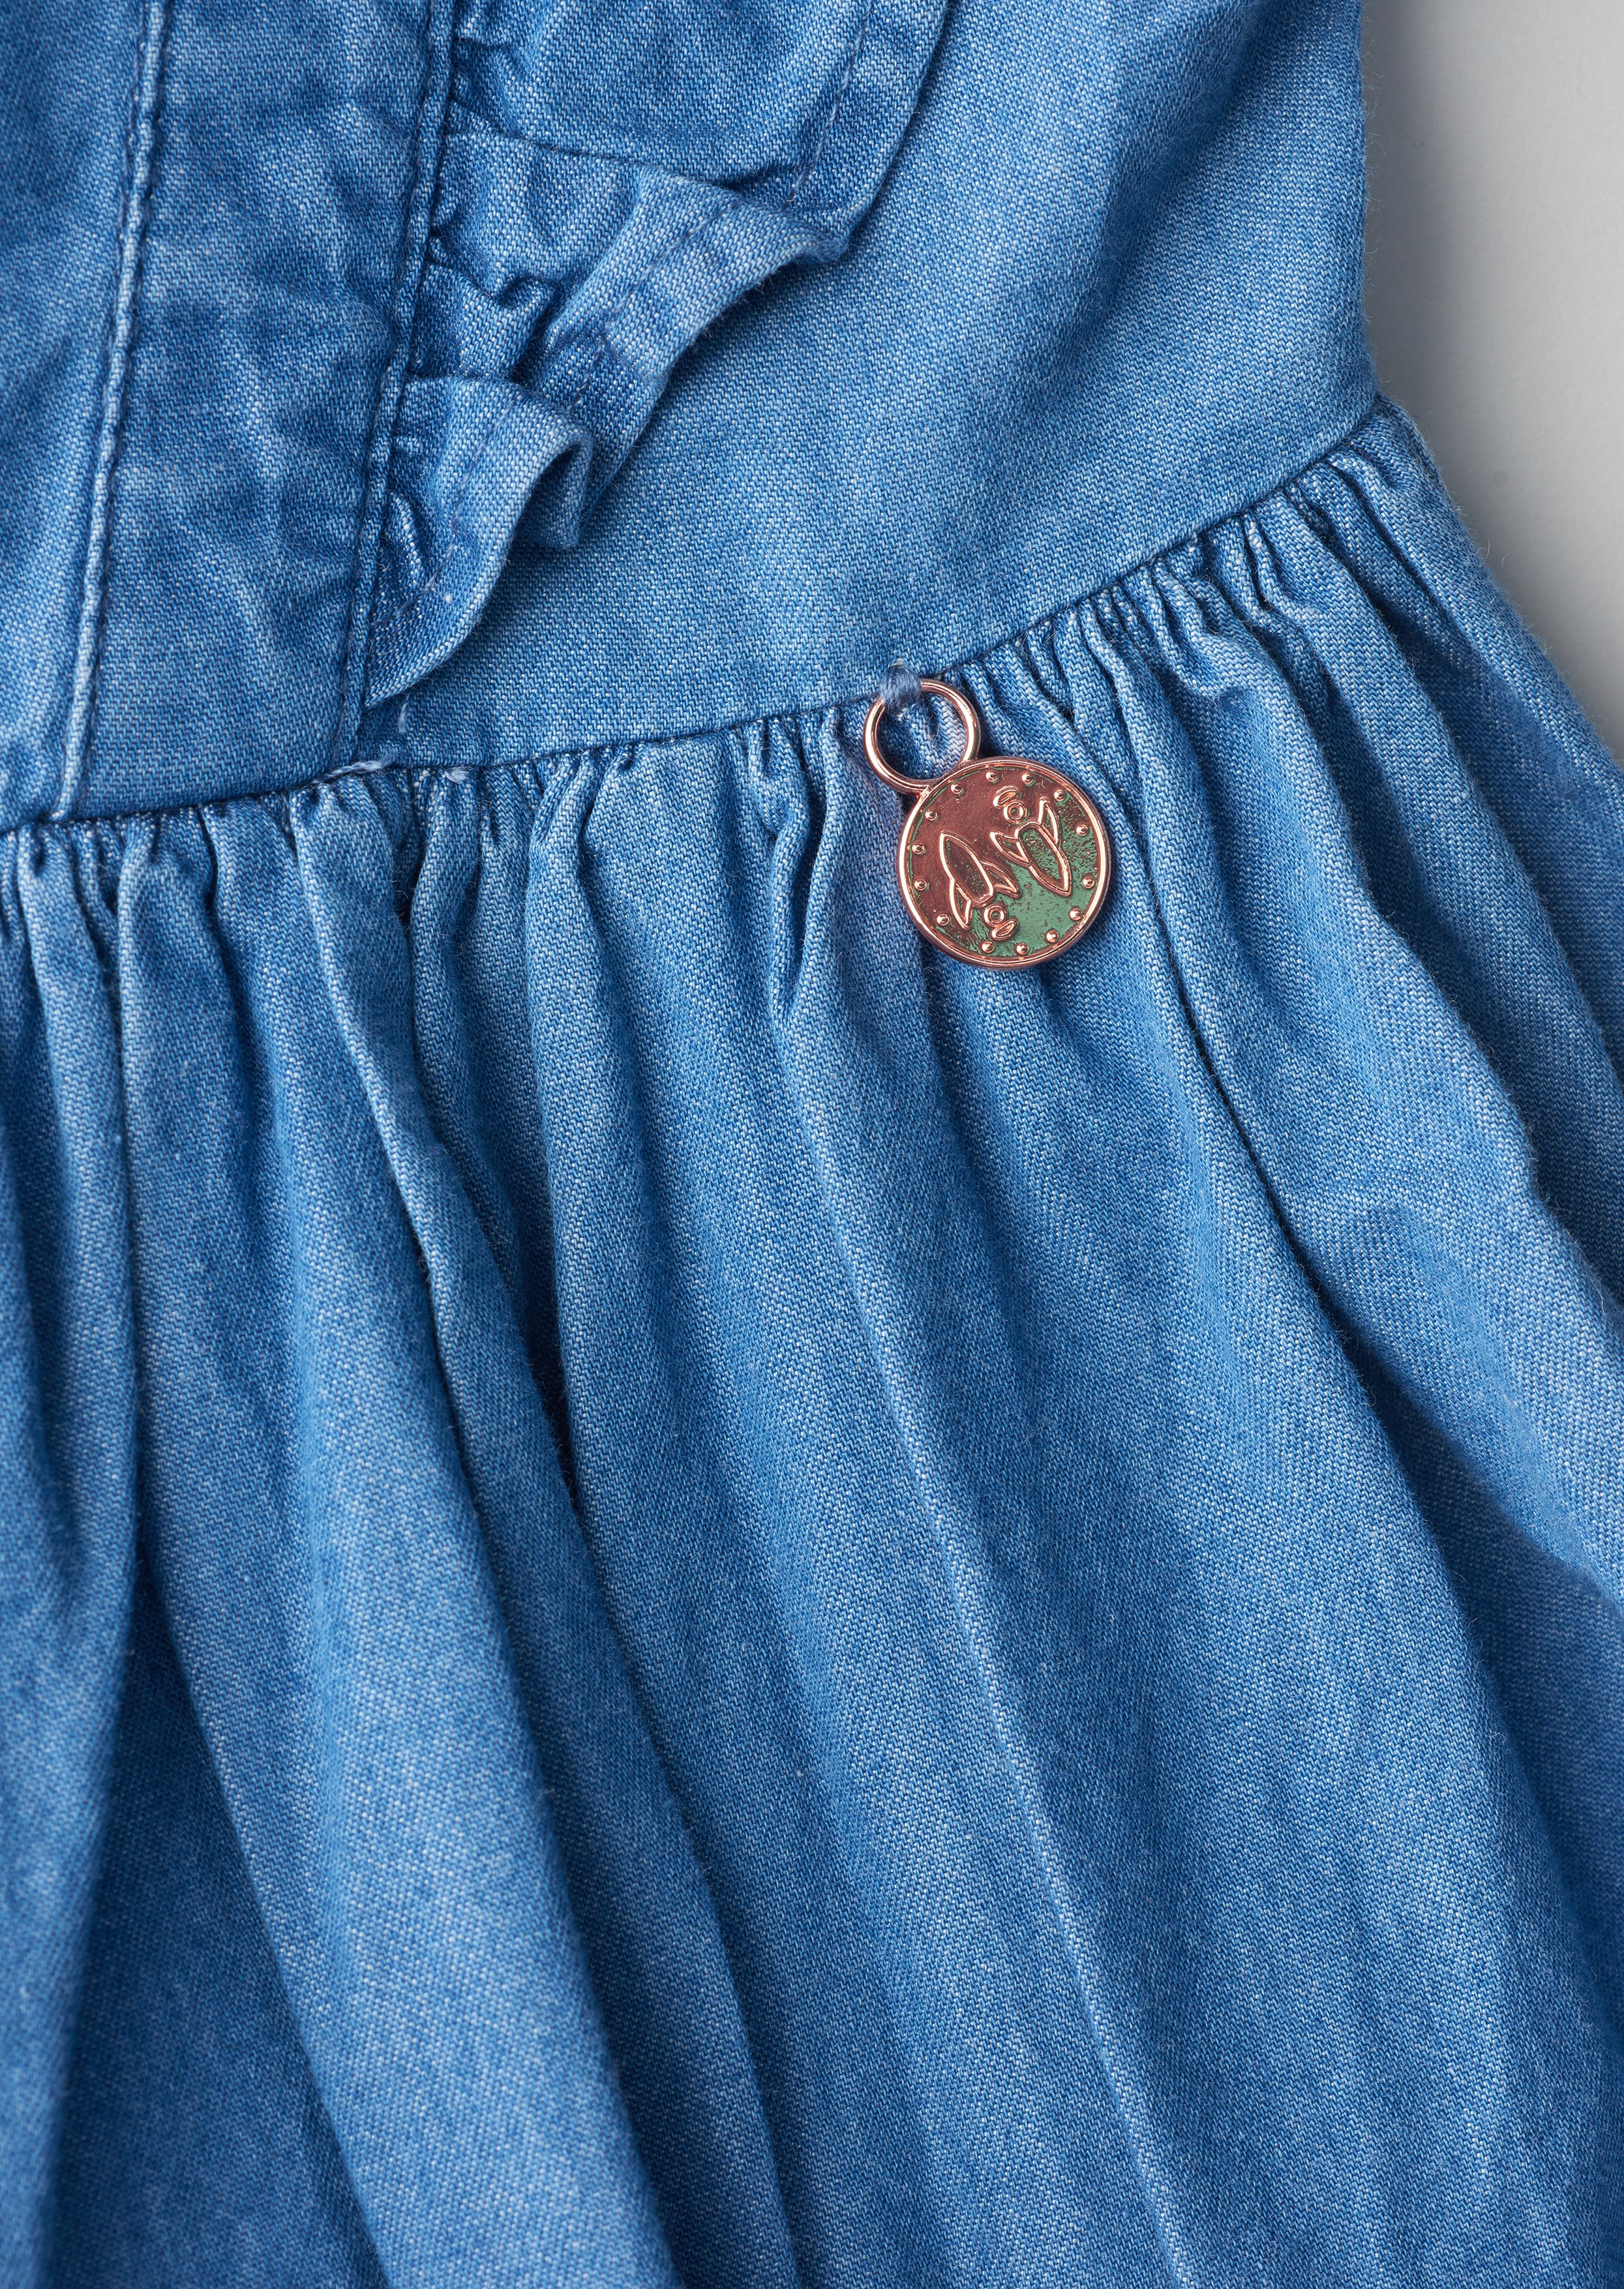 Girls Cotton Blue Dress with Cross Back Design